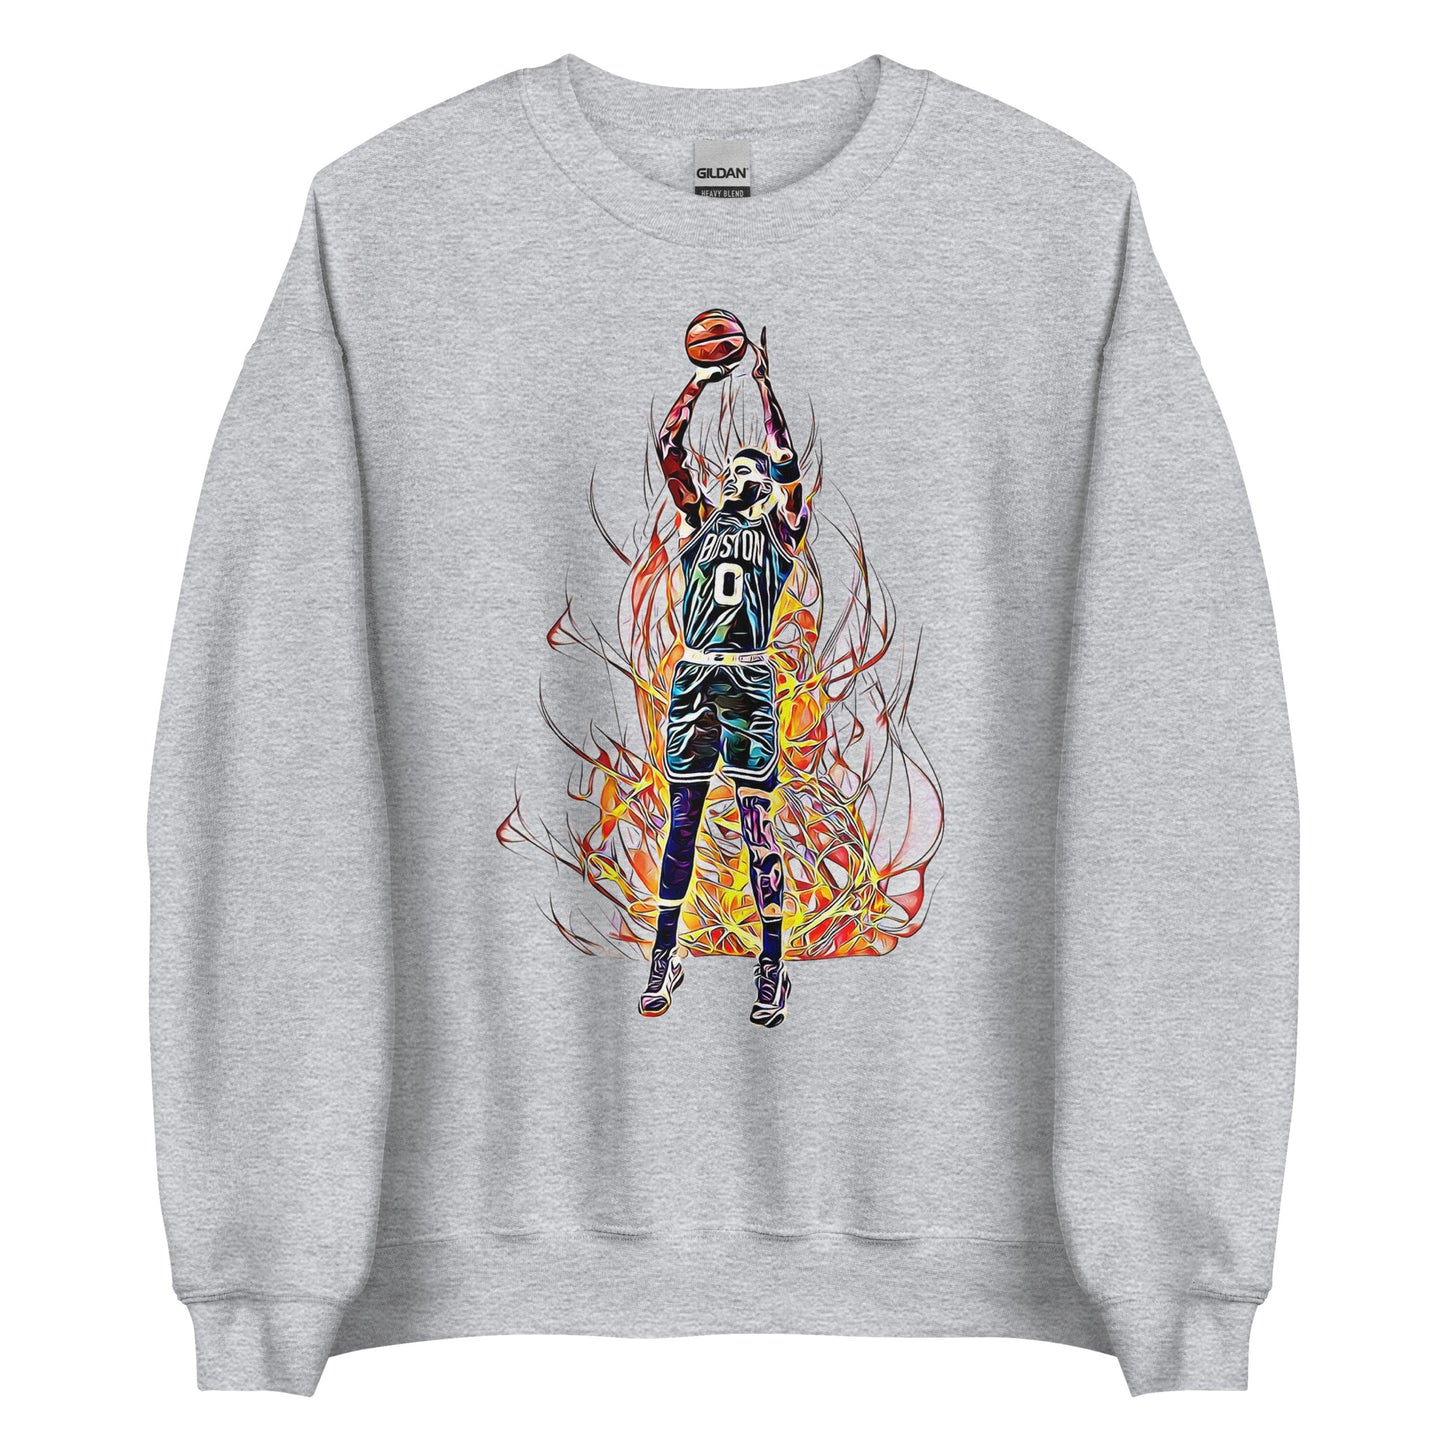 Jason Tatum Human Torch Unisex Sweatshirt